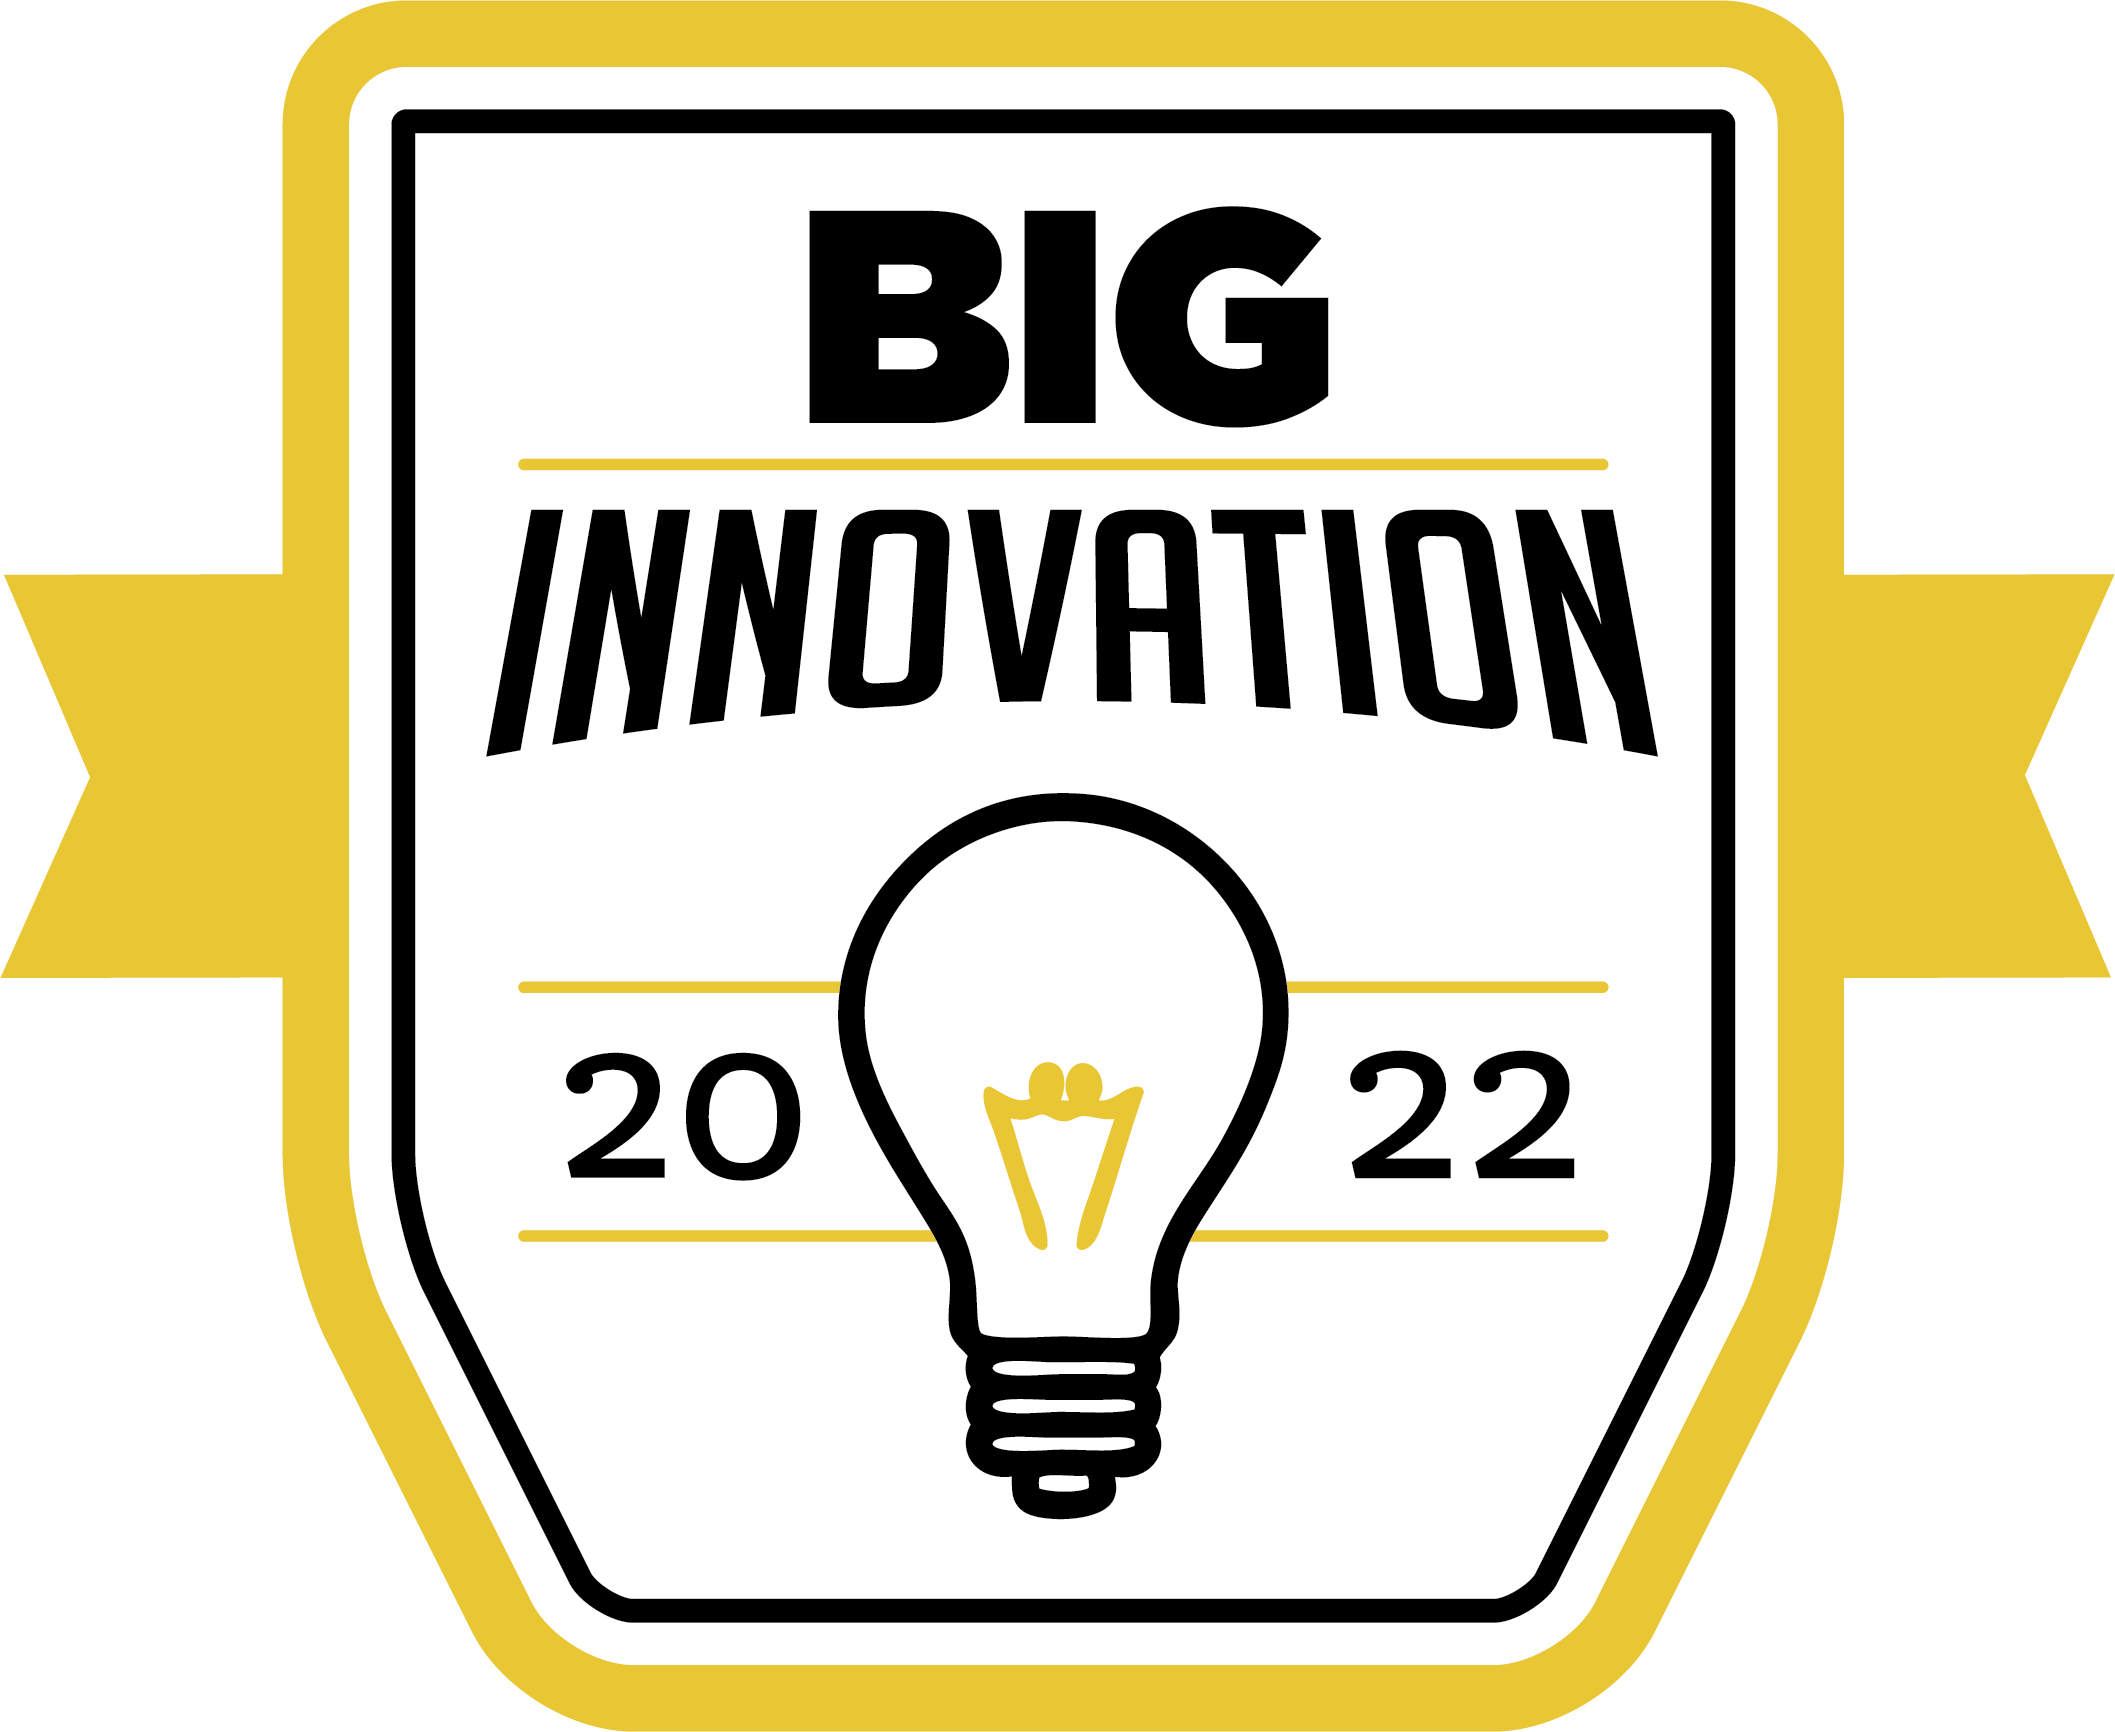 Big Innovation 2022 badge